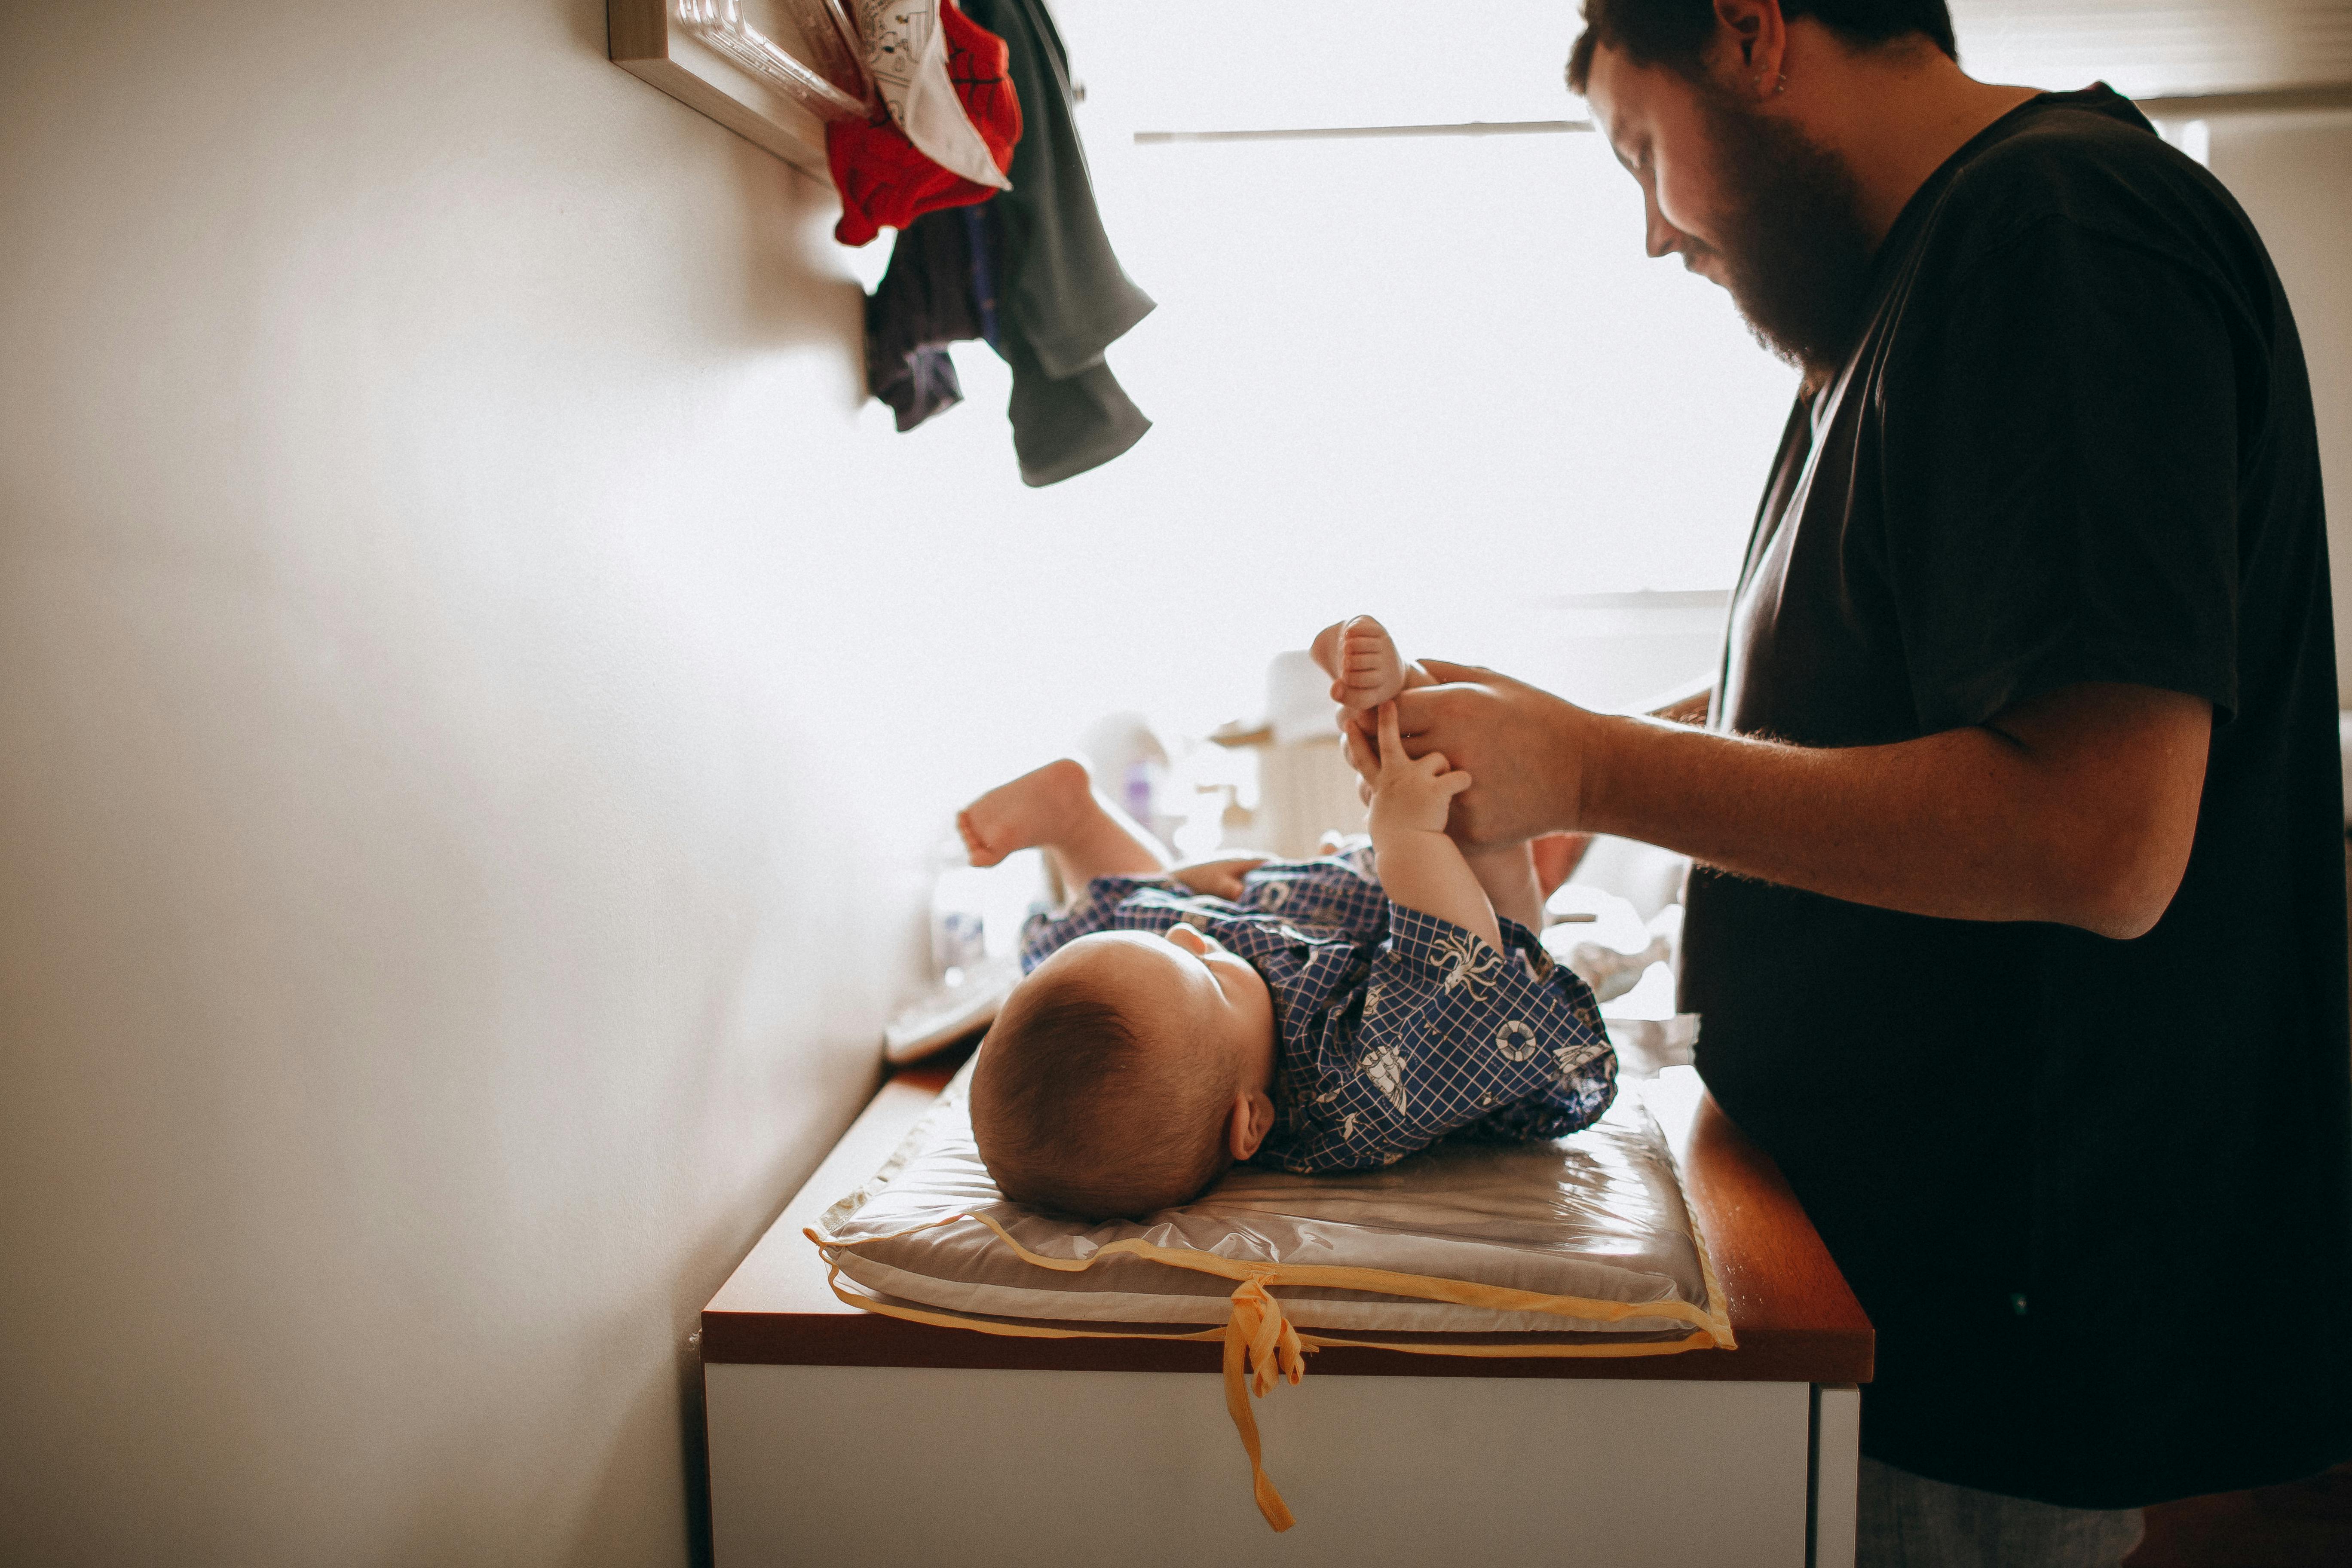 tip on preparing for fatherhood: learn basic baby care skills